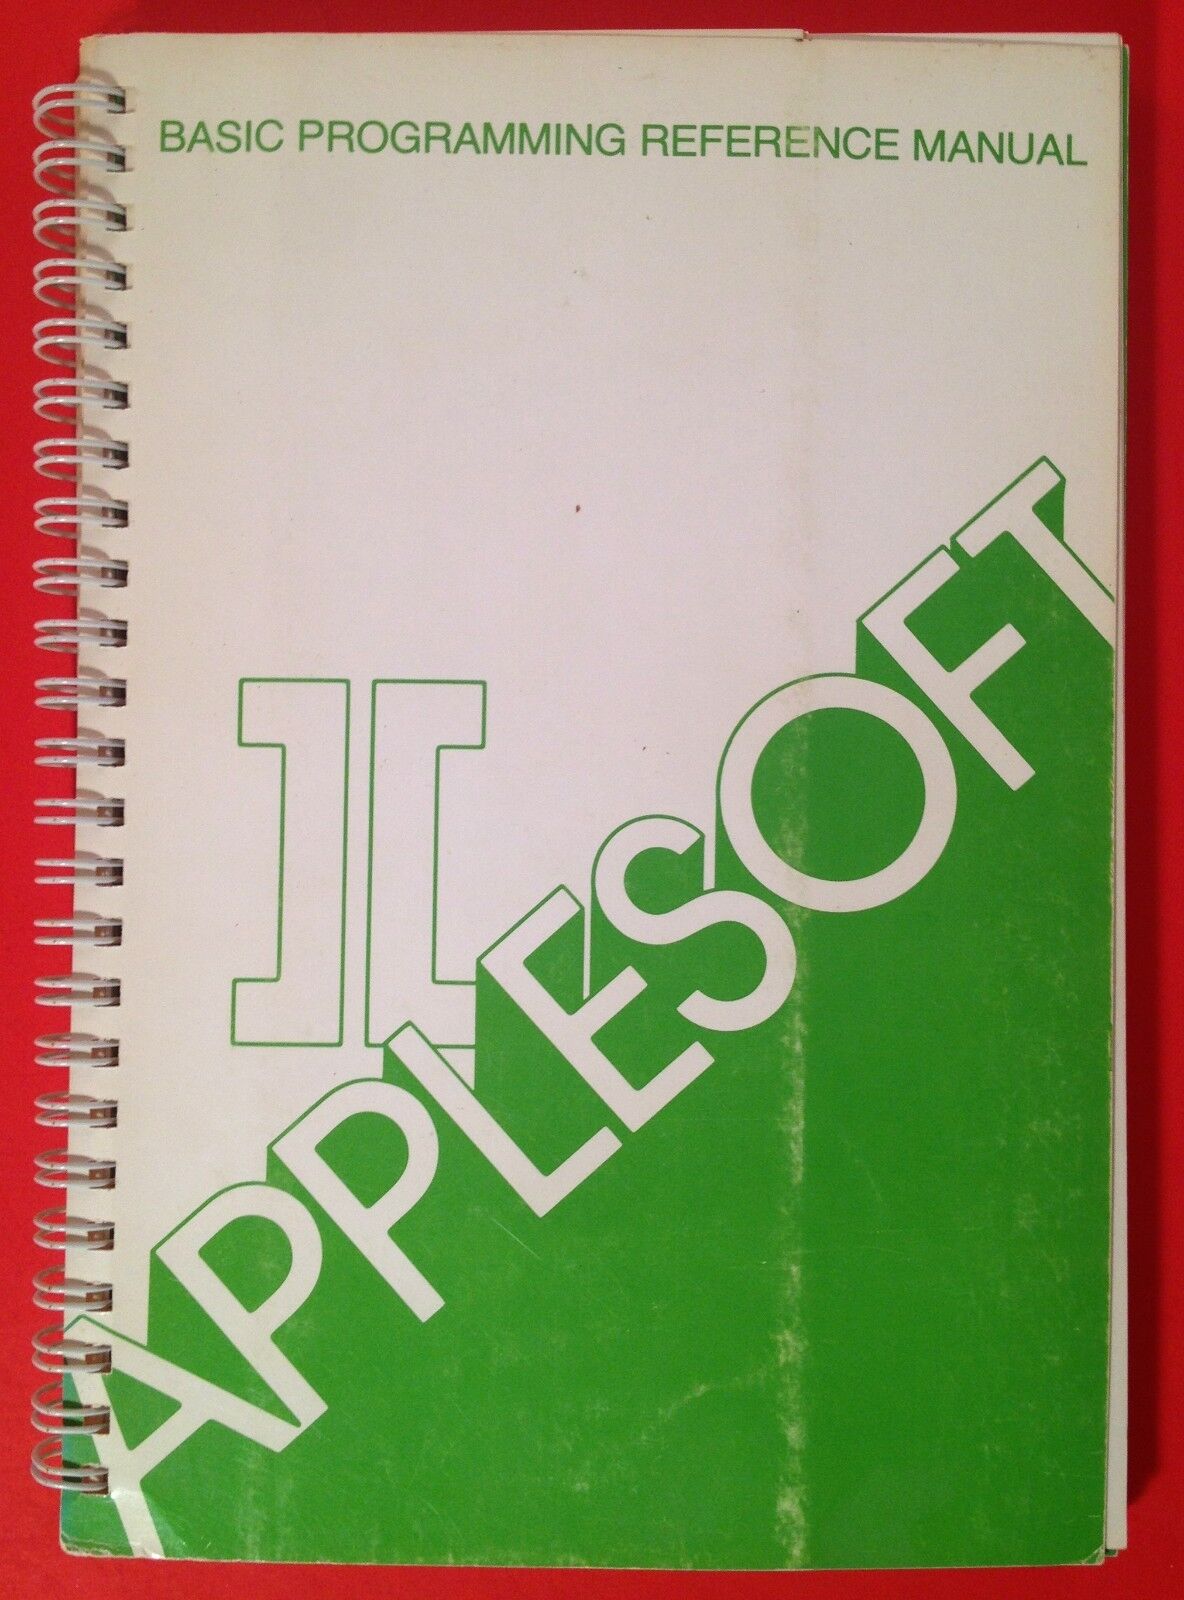 Applesoft II Basic Programming Reference Manual - Vintage 1981 - NICE